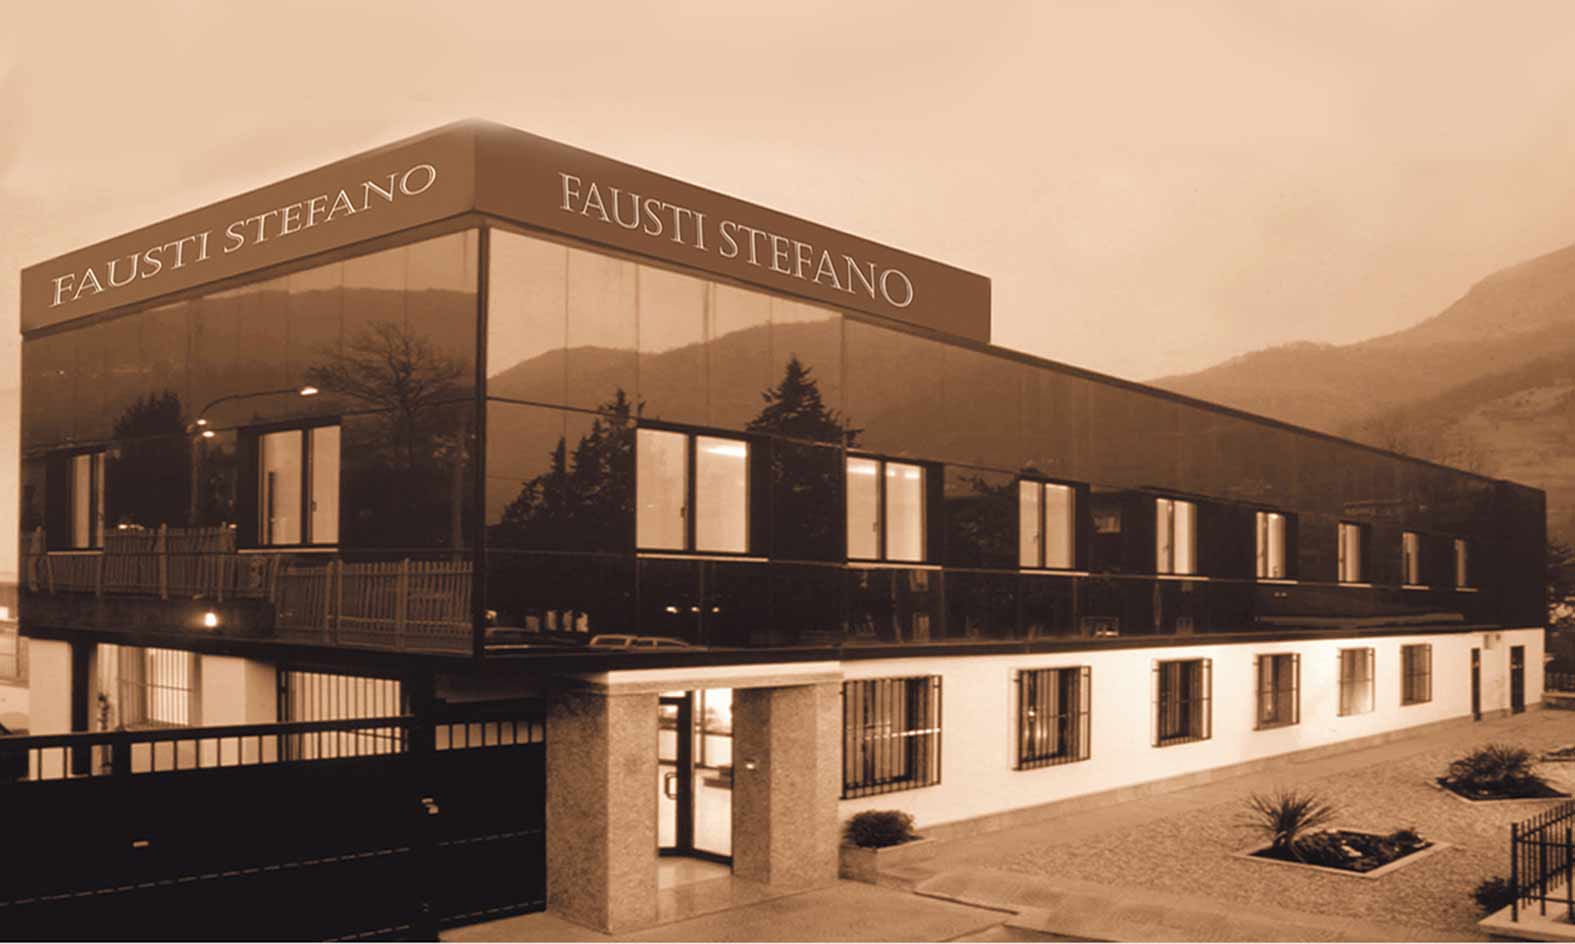 Fausti Stefano Factory